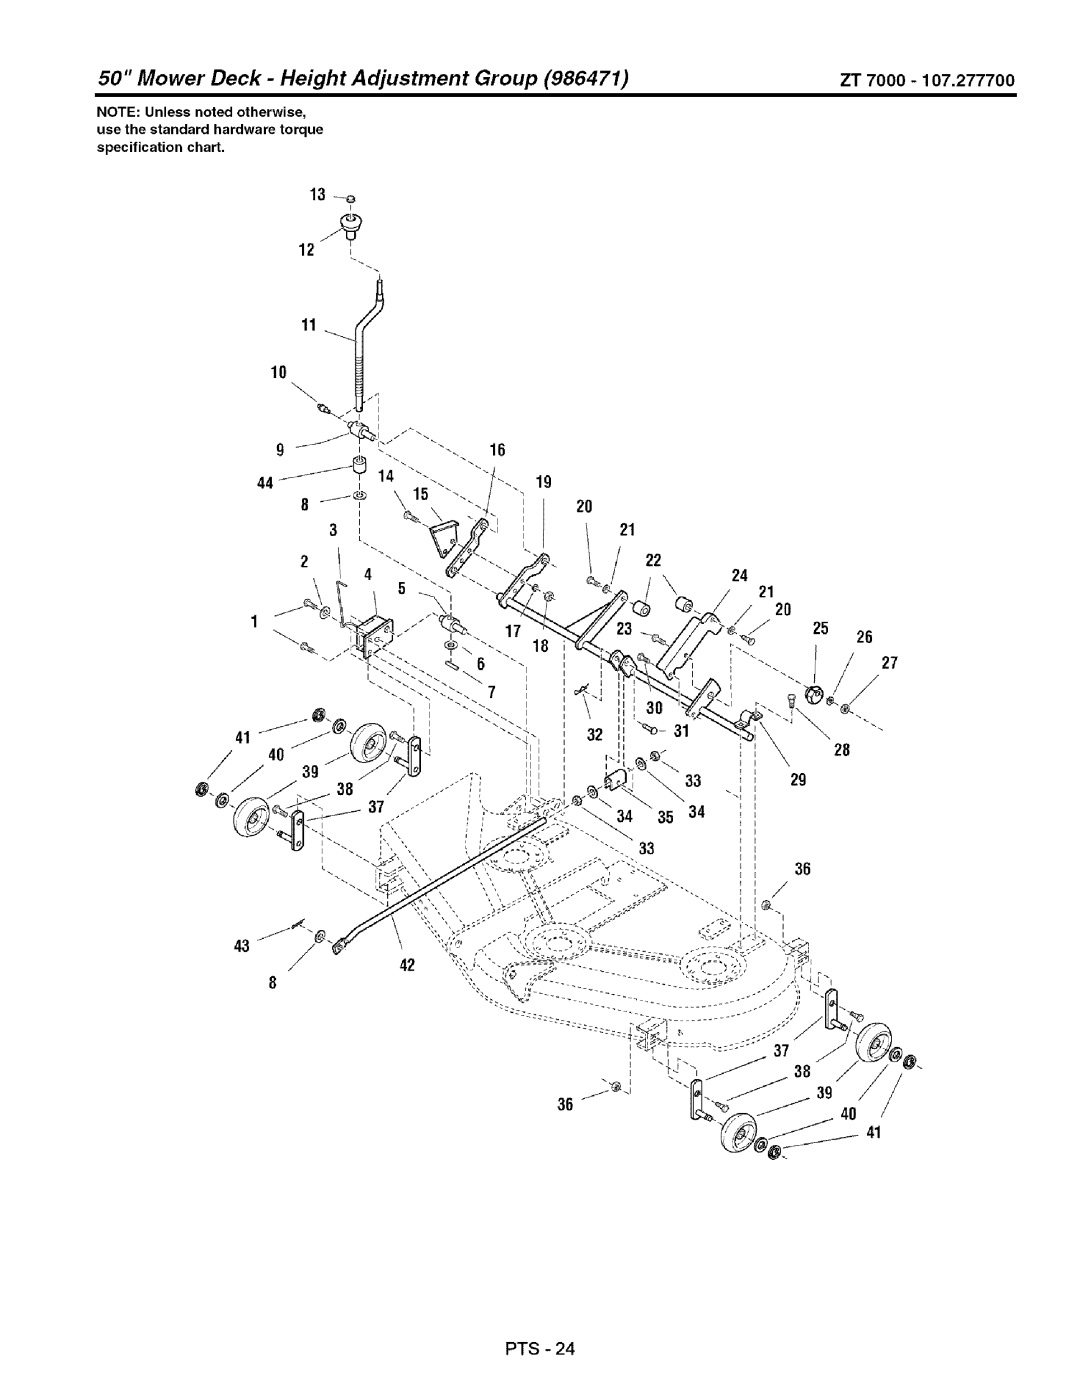 Craftsman 107.2777 manual Mower Deck - Height Adjustment Group, ZT 7000, 20 21 22, 26 27, Pts 